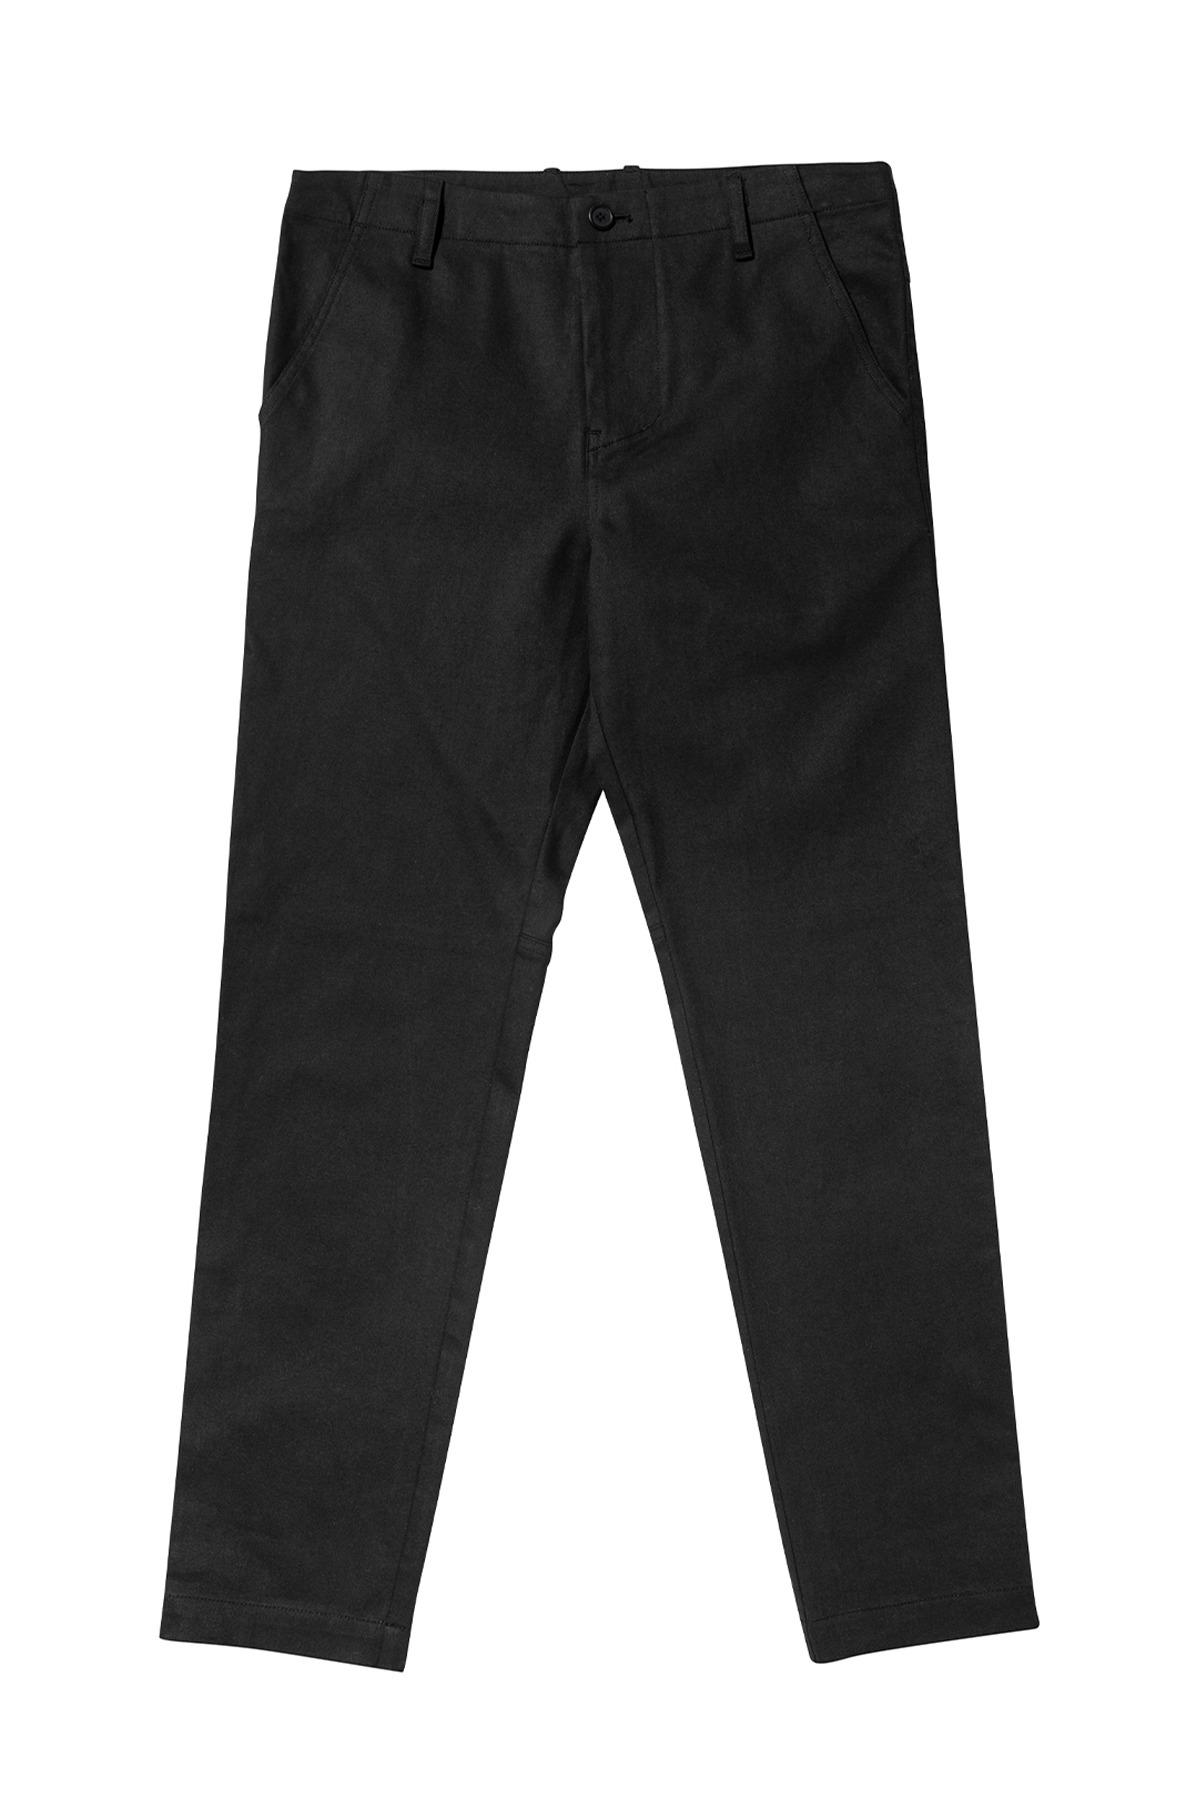 #jp01 Fatigue hound tapered pants (black)